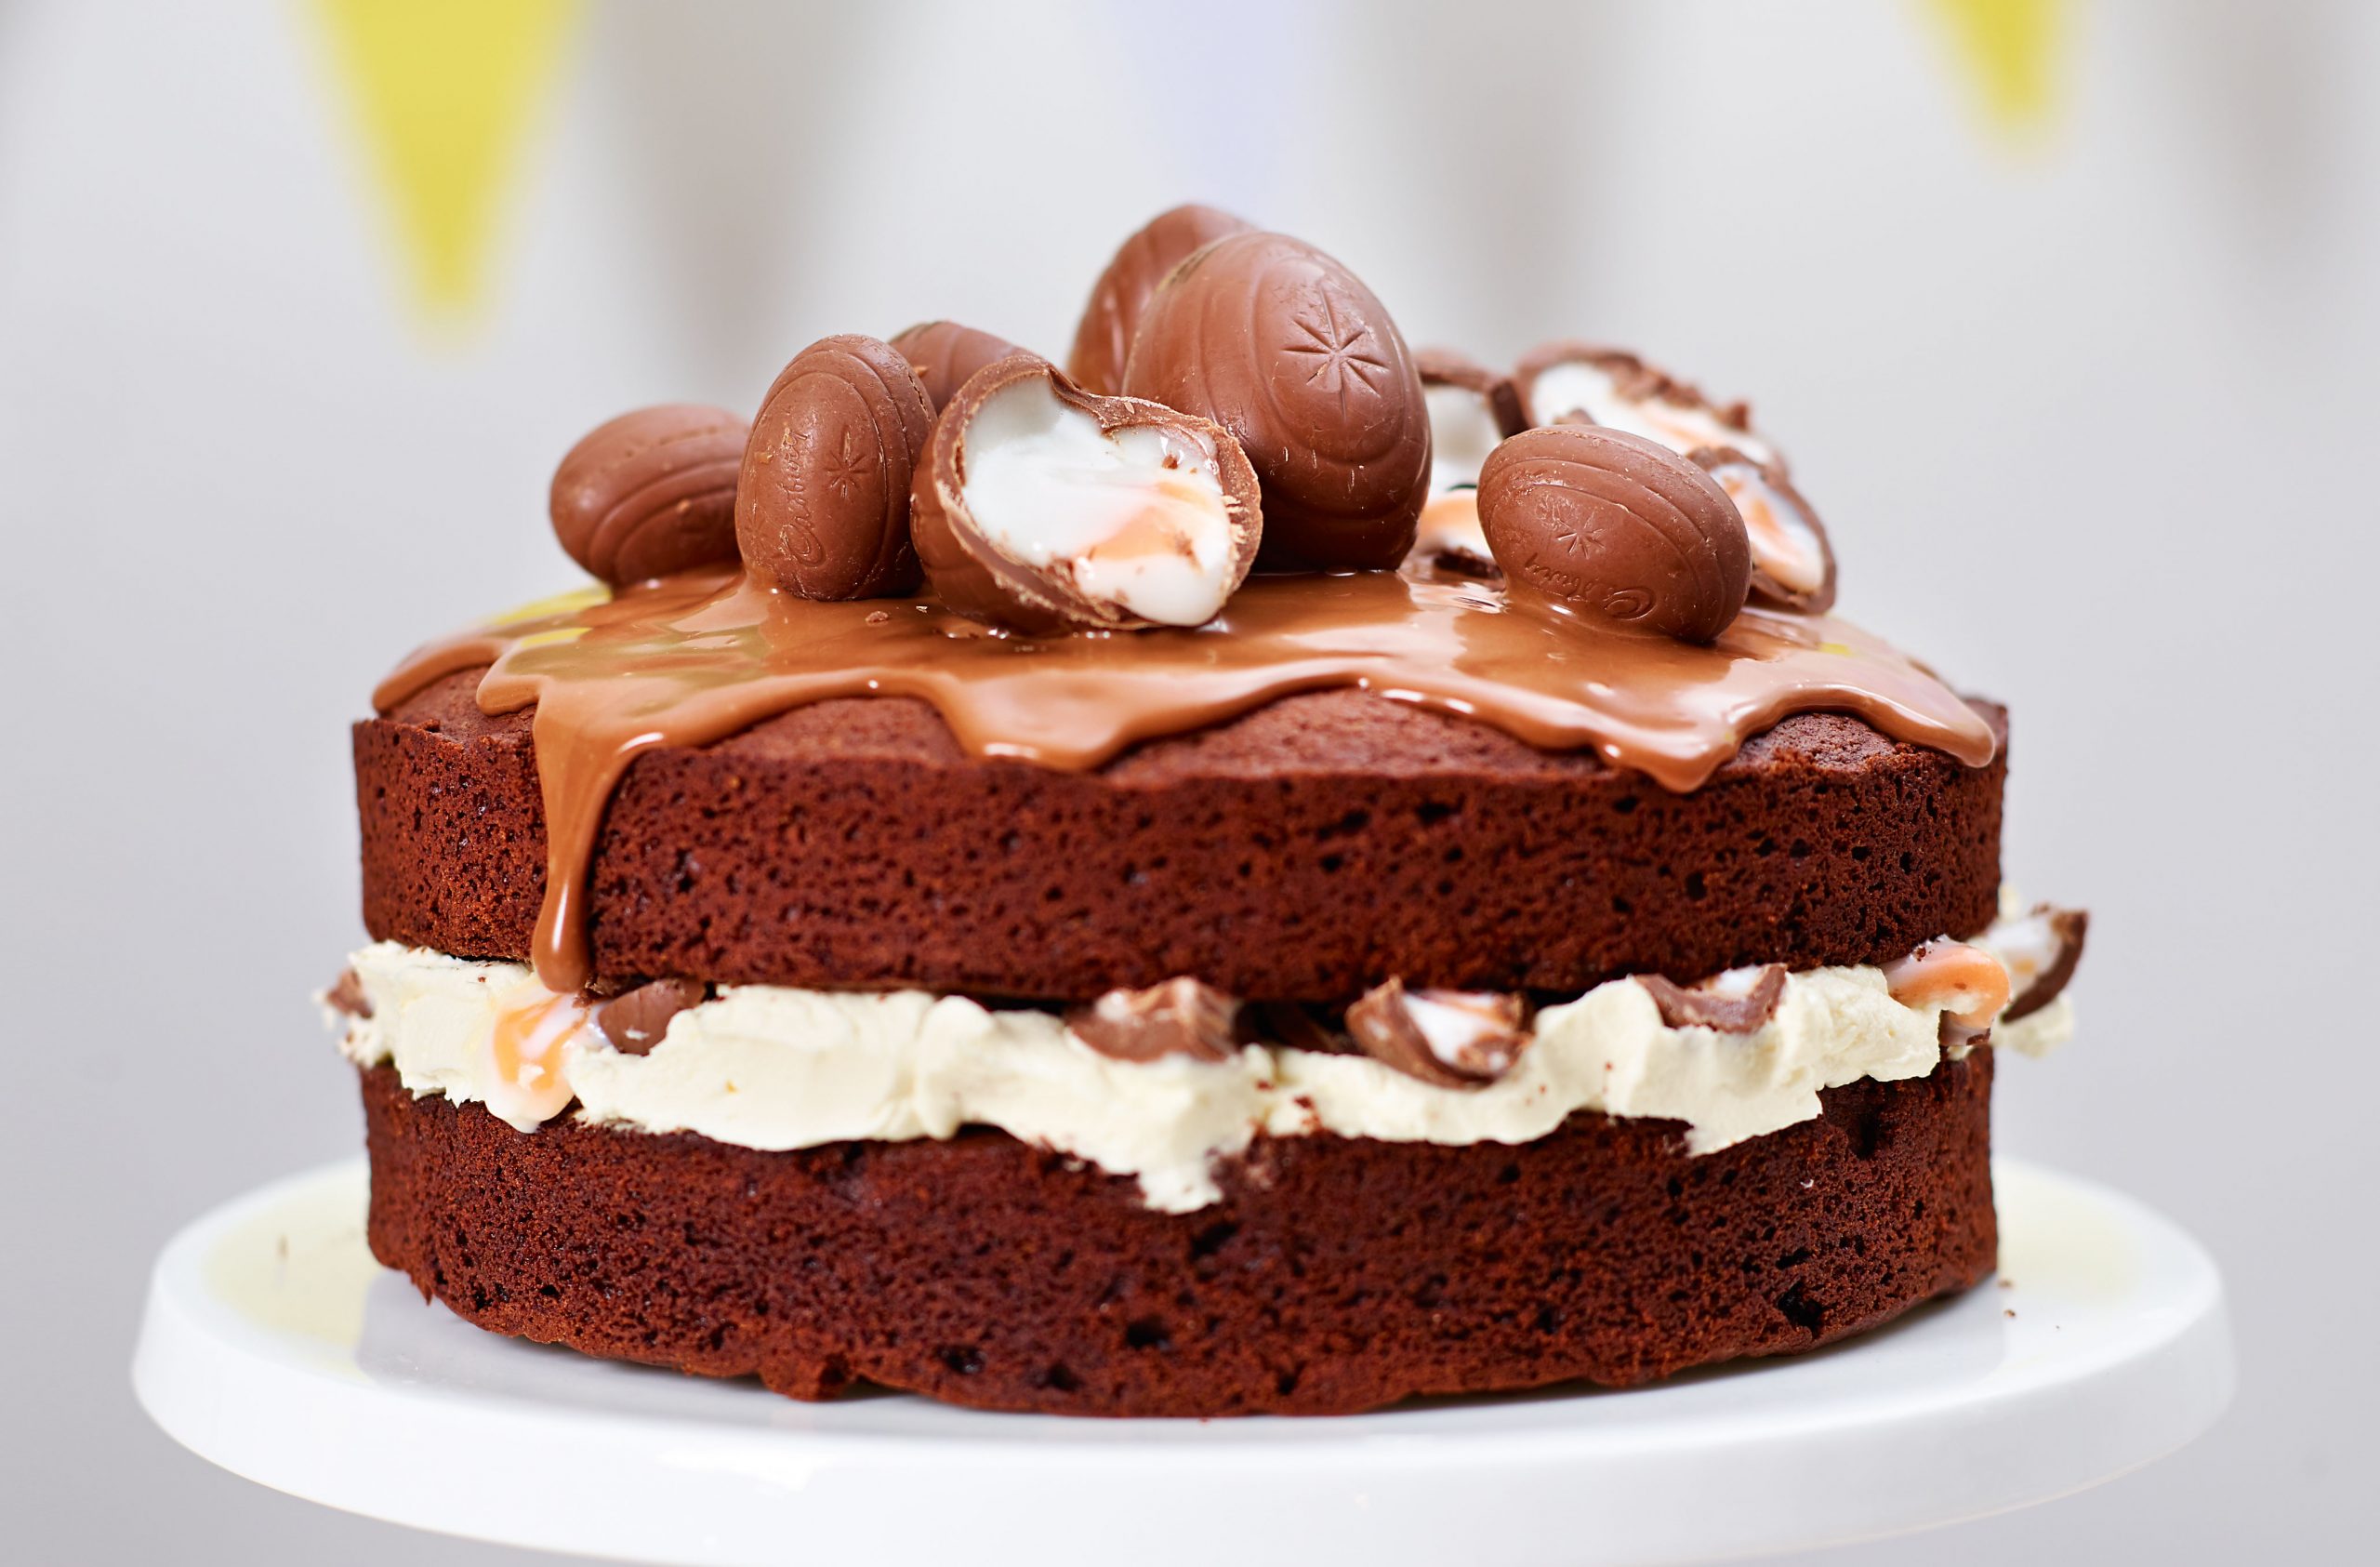 Easy Chocolate Sponge Cake Recipe Using Only 2 Eggs | How To Make Chocolate  Cake | Cake Fusion - YouTube